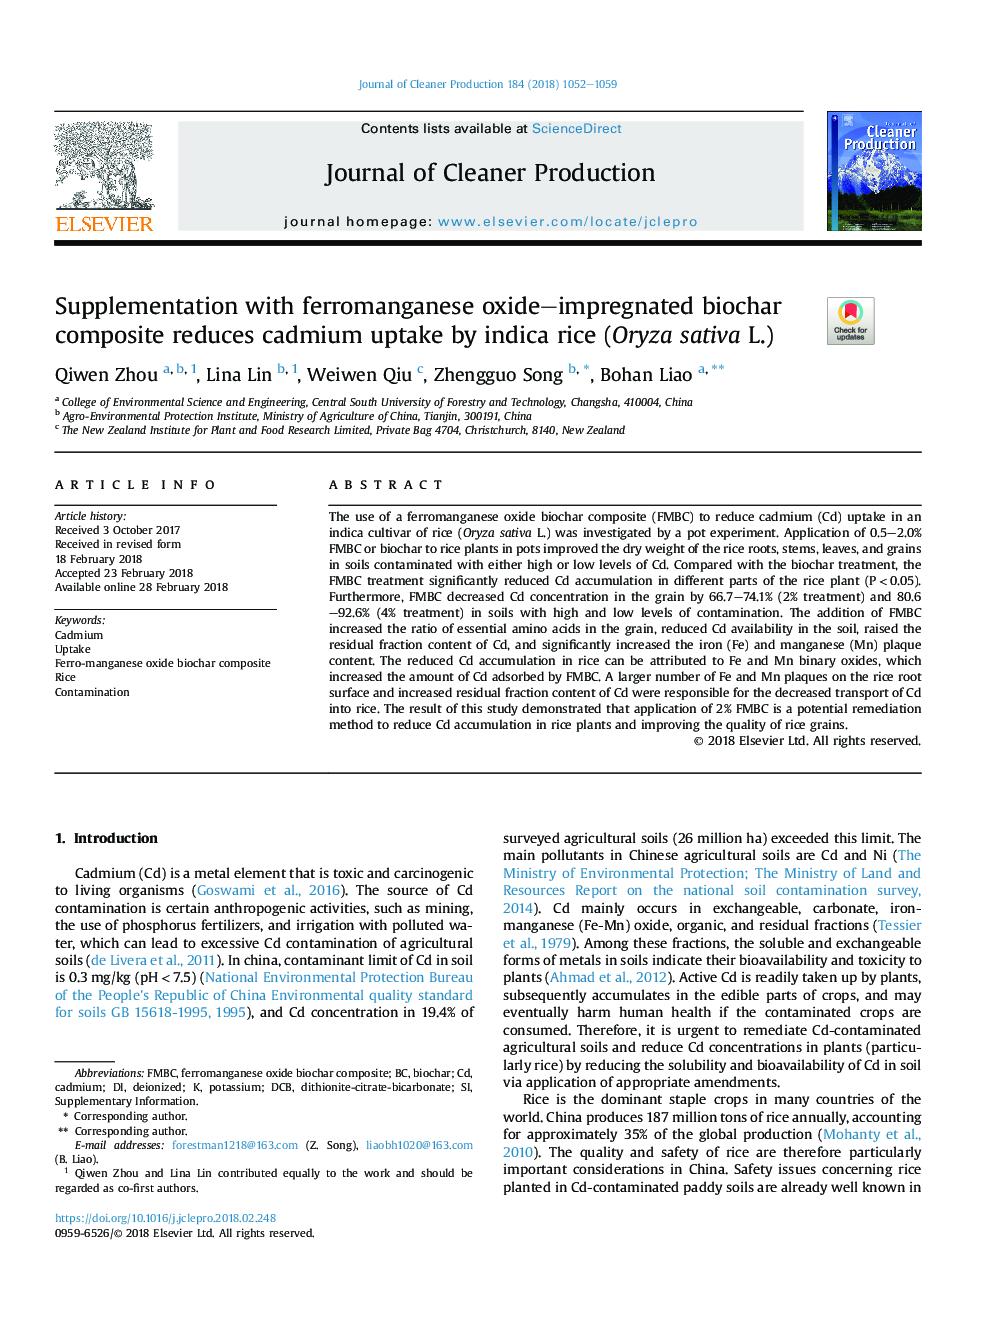 Supplementation with ferromanganese oxide-impregnated biochar composite reduces cadmium uptake by indica rice (Oryza sativa L.)